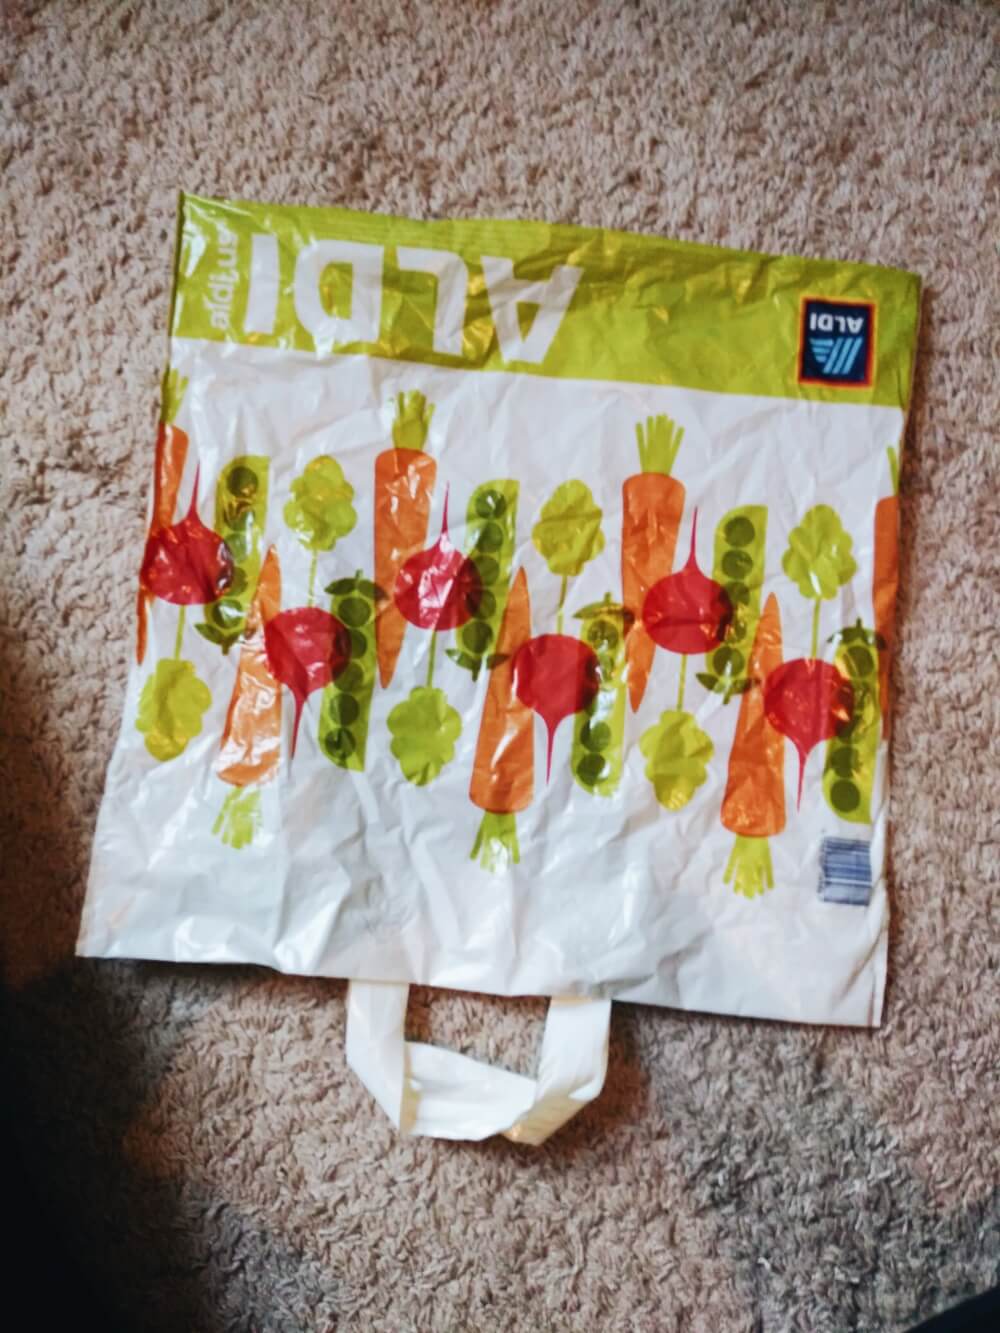 Flattened Aldi grocery bag upside down on floor